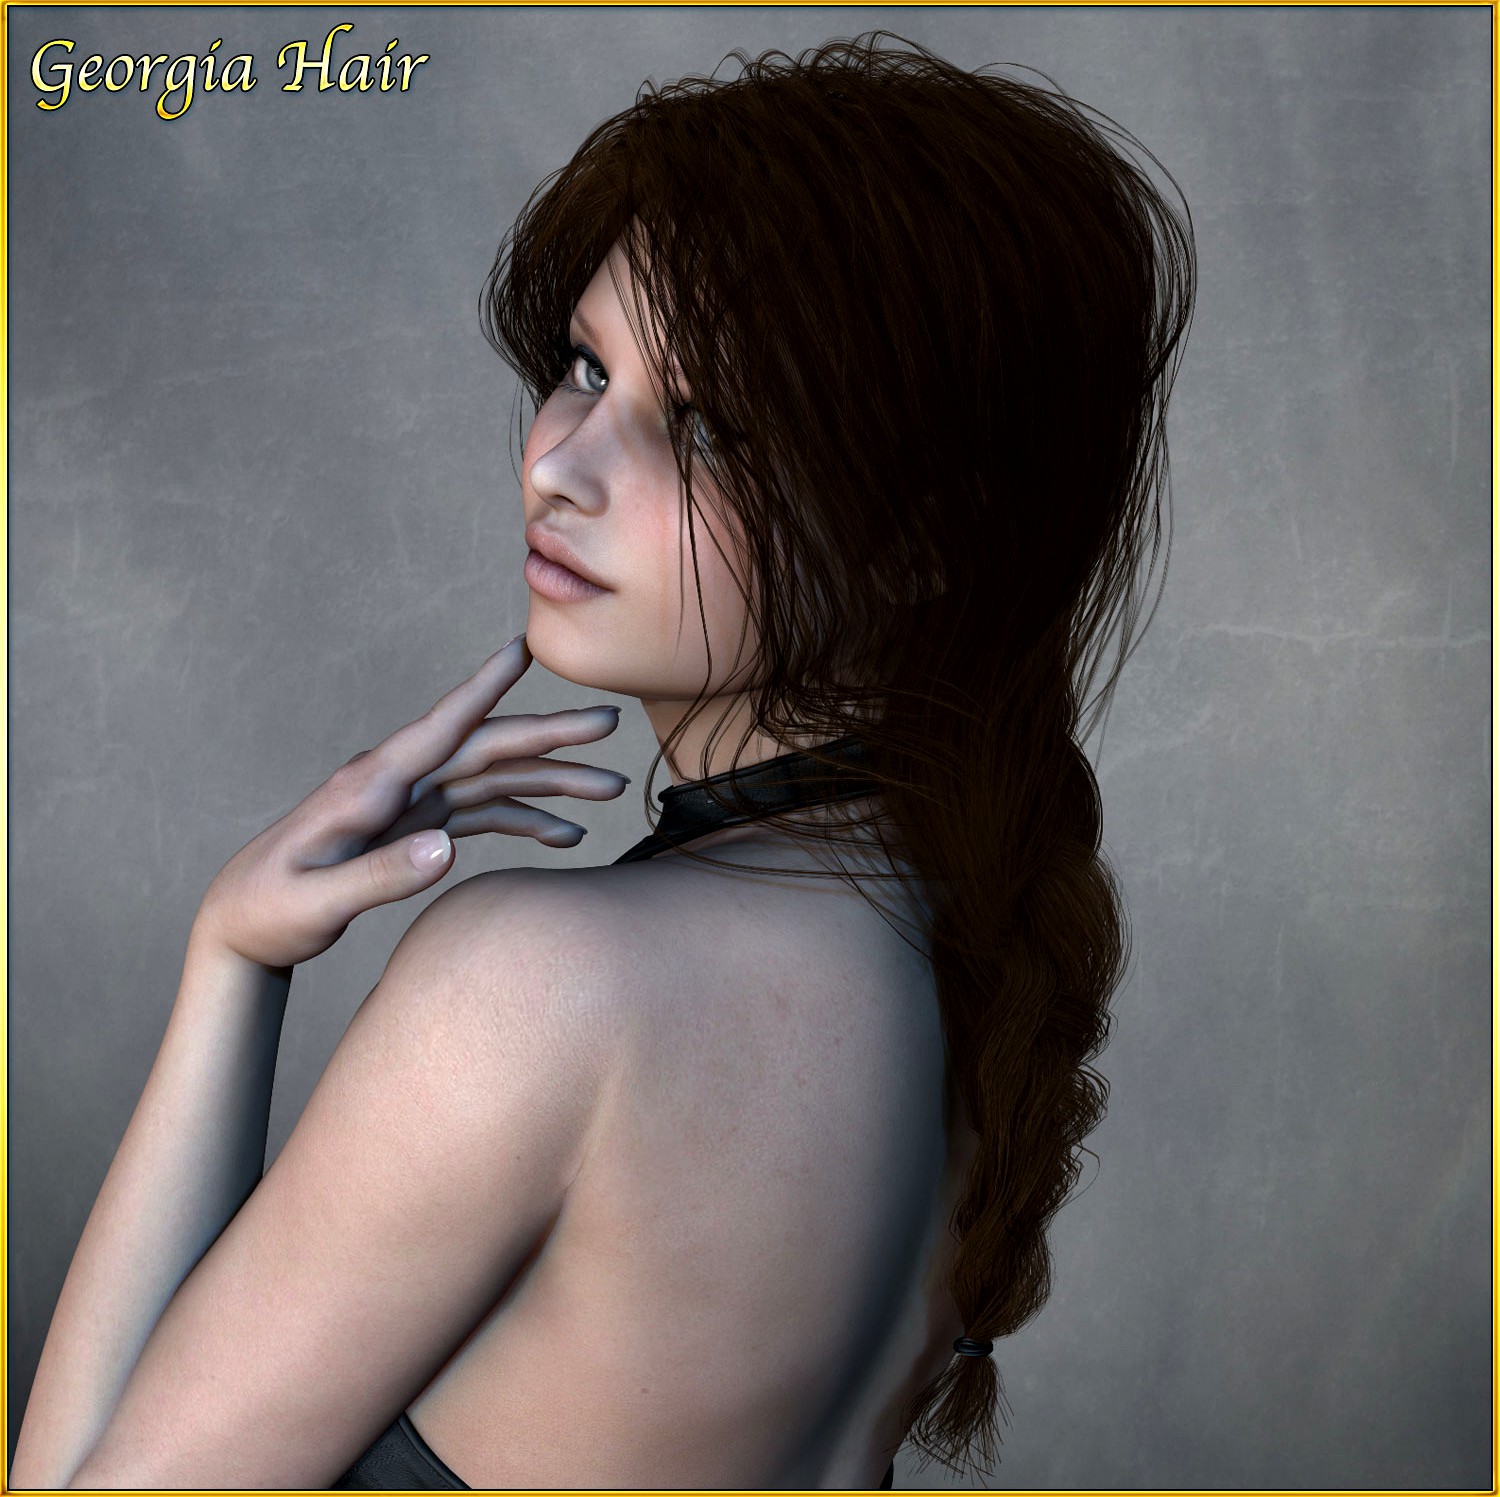 Georgia Hair for V4 M4 and La Femme - Poser